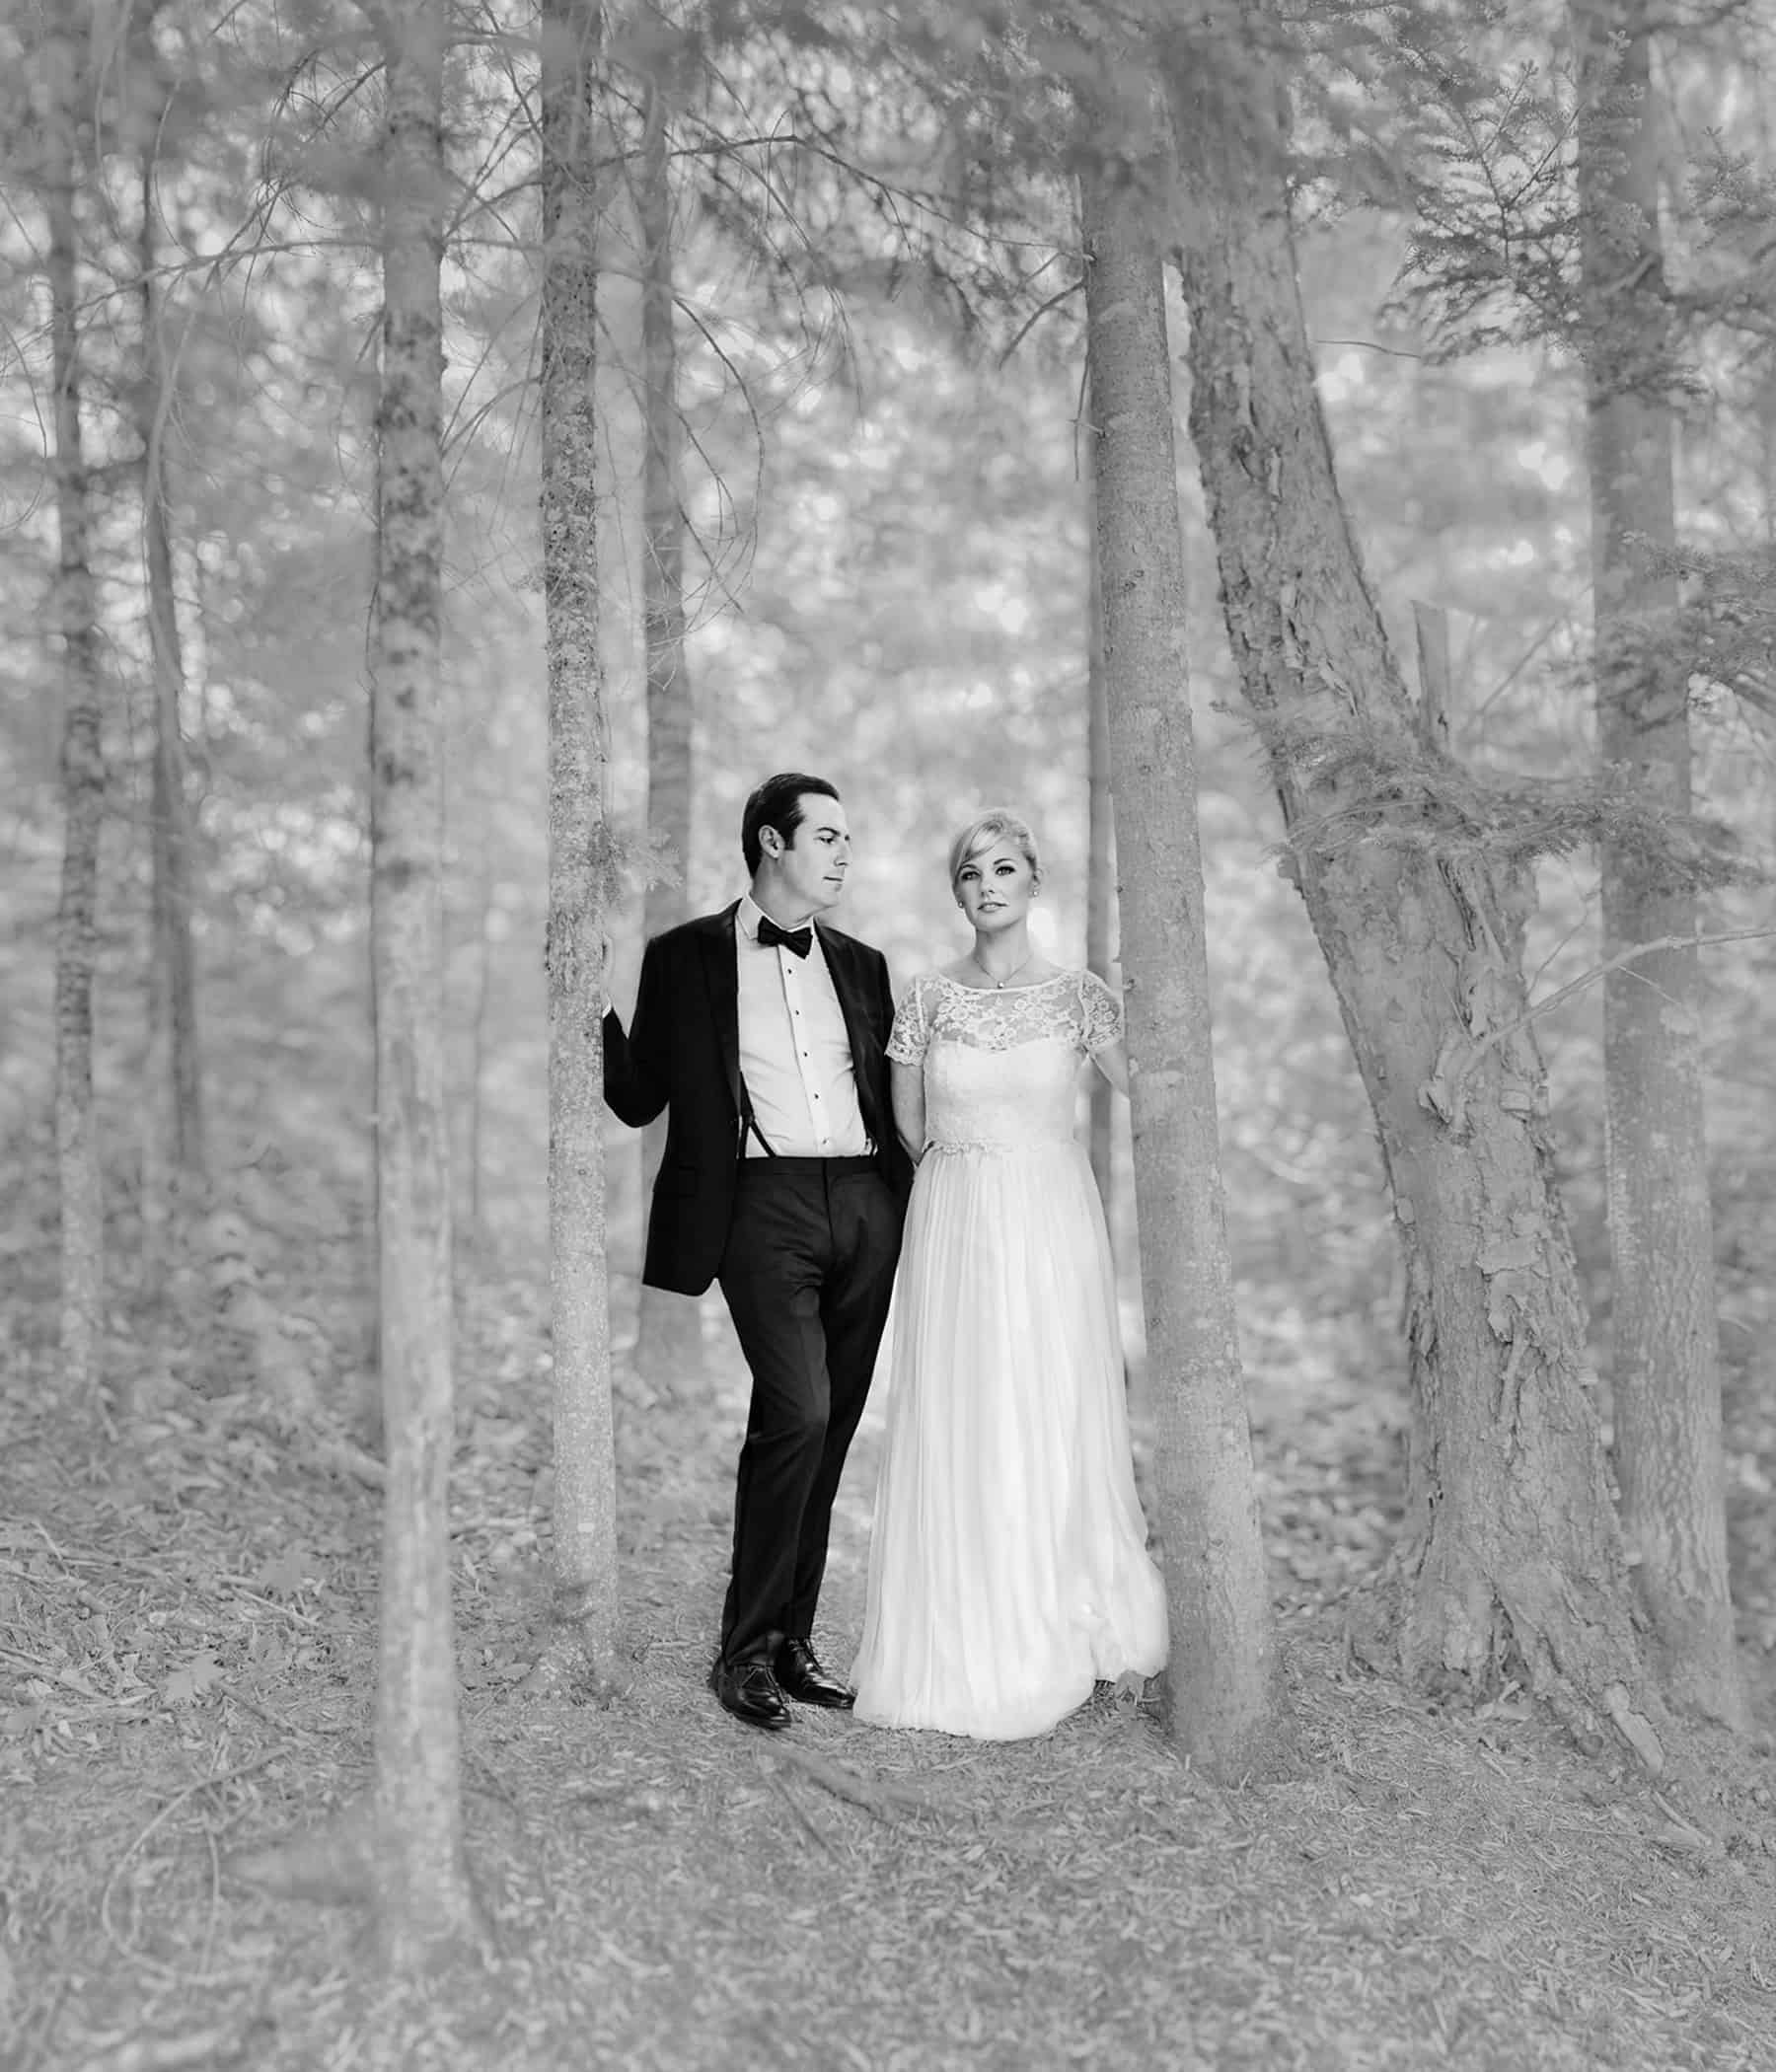 Dark and moody fine art wedding photography by Oli Sansom